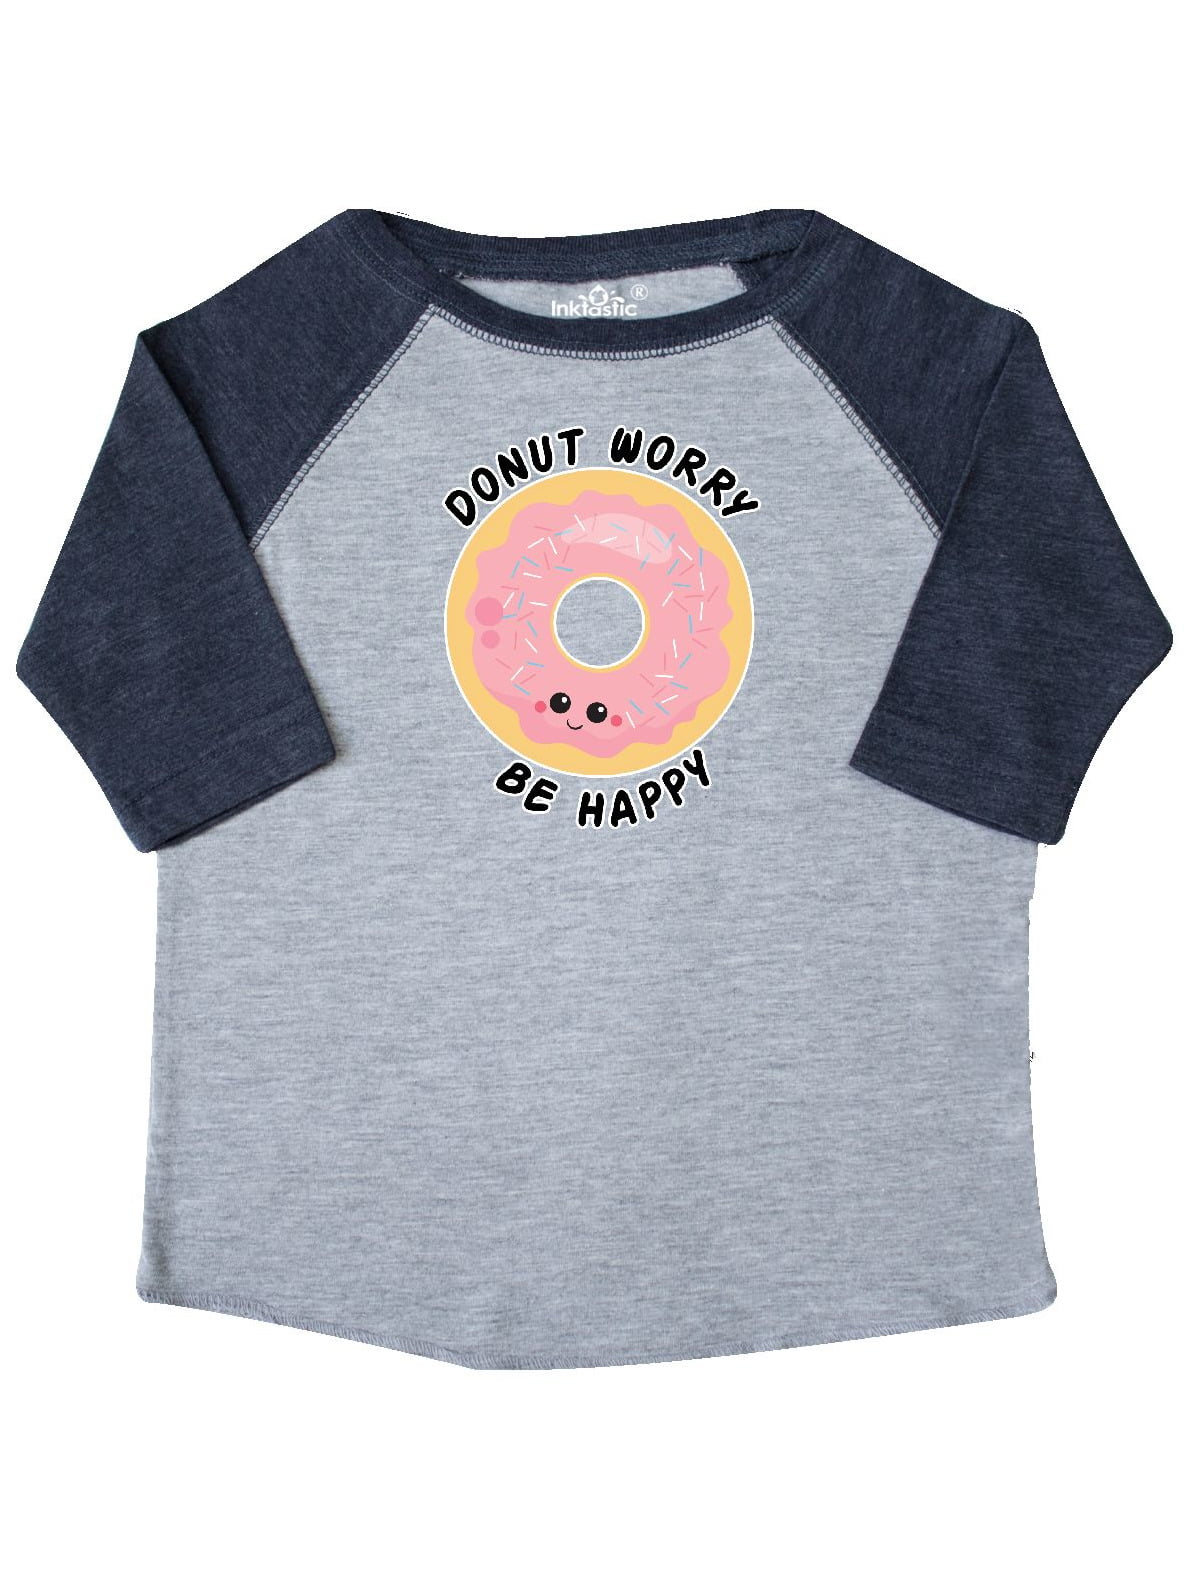 Kids Donut Shirt I Donut Care Funny TShirt Childrens Clothing Boys Shirt Girls 